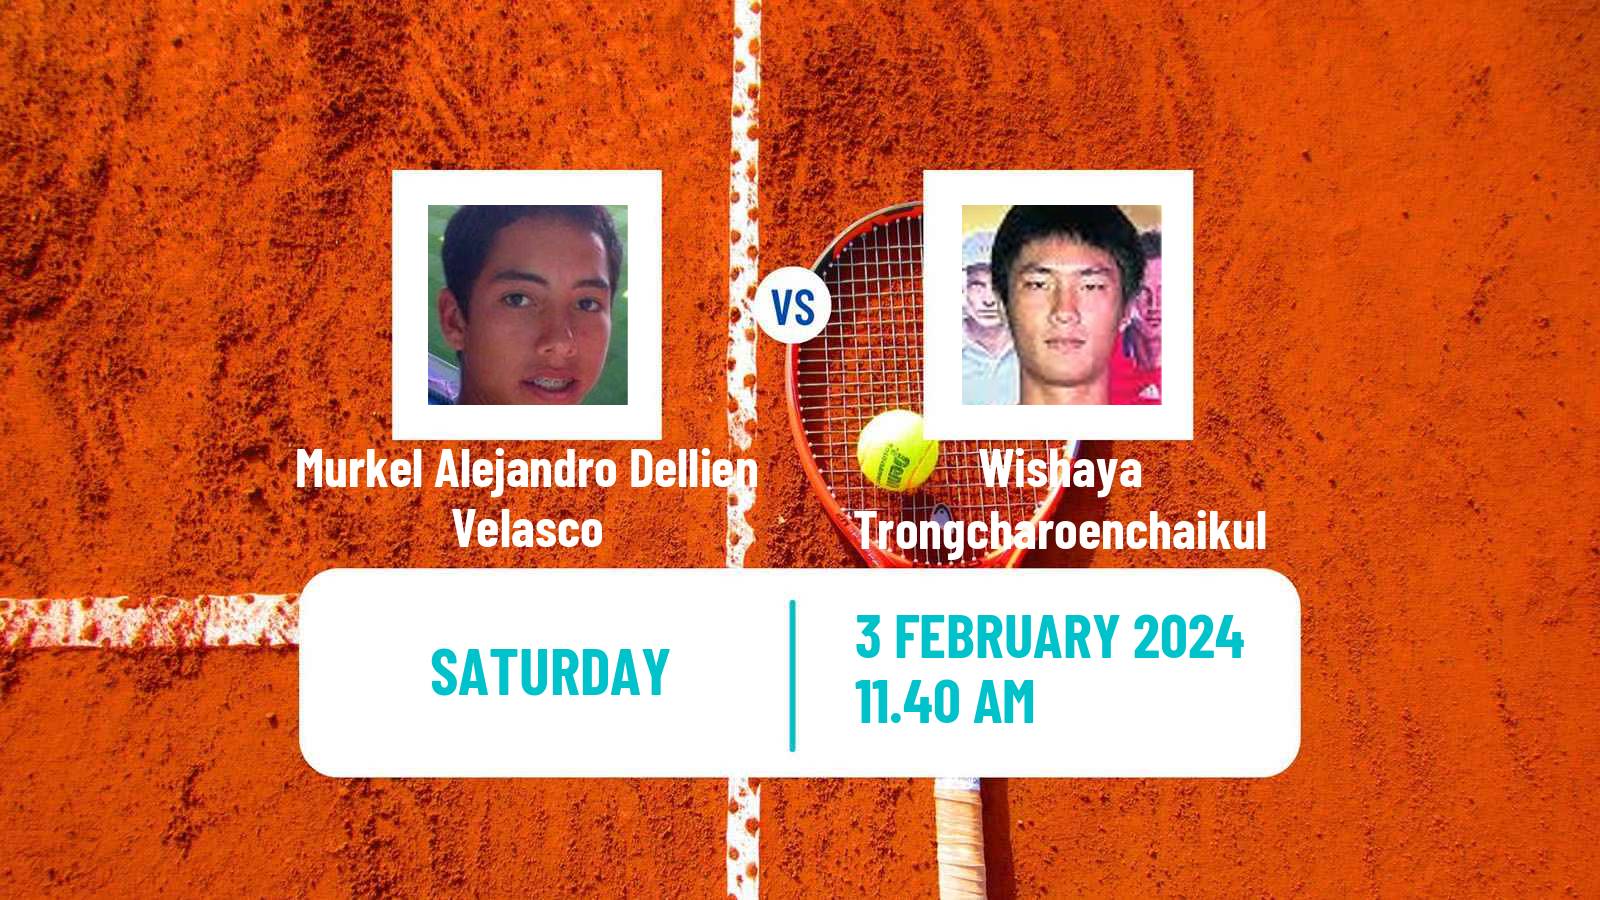 Tennis Davis Cup World Group II Murkel Alejandro Dellien Velasco - Wishaya Trongcharoenchaikul